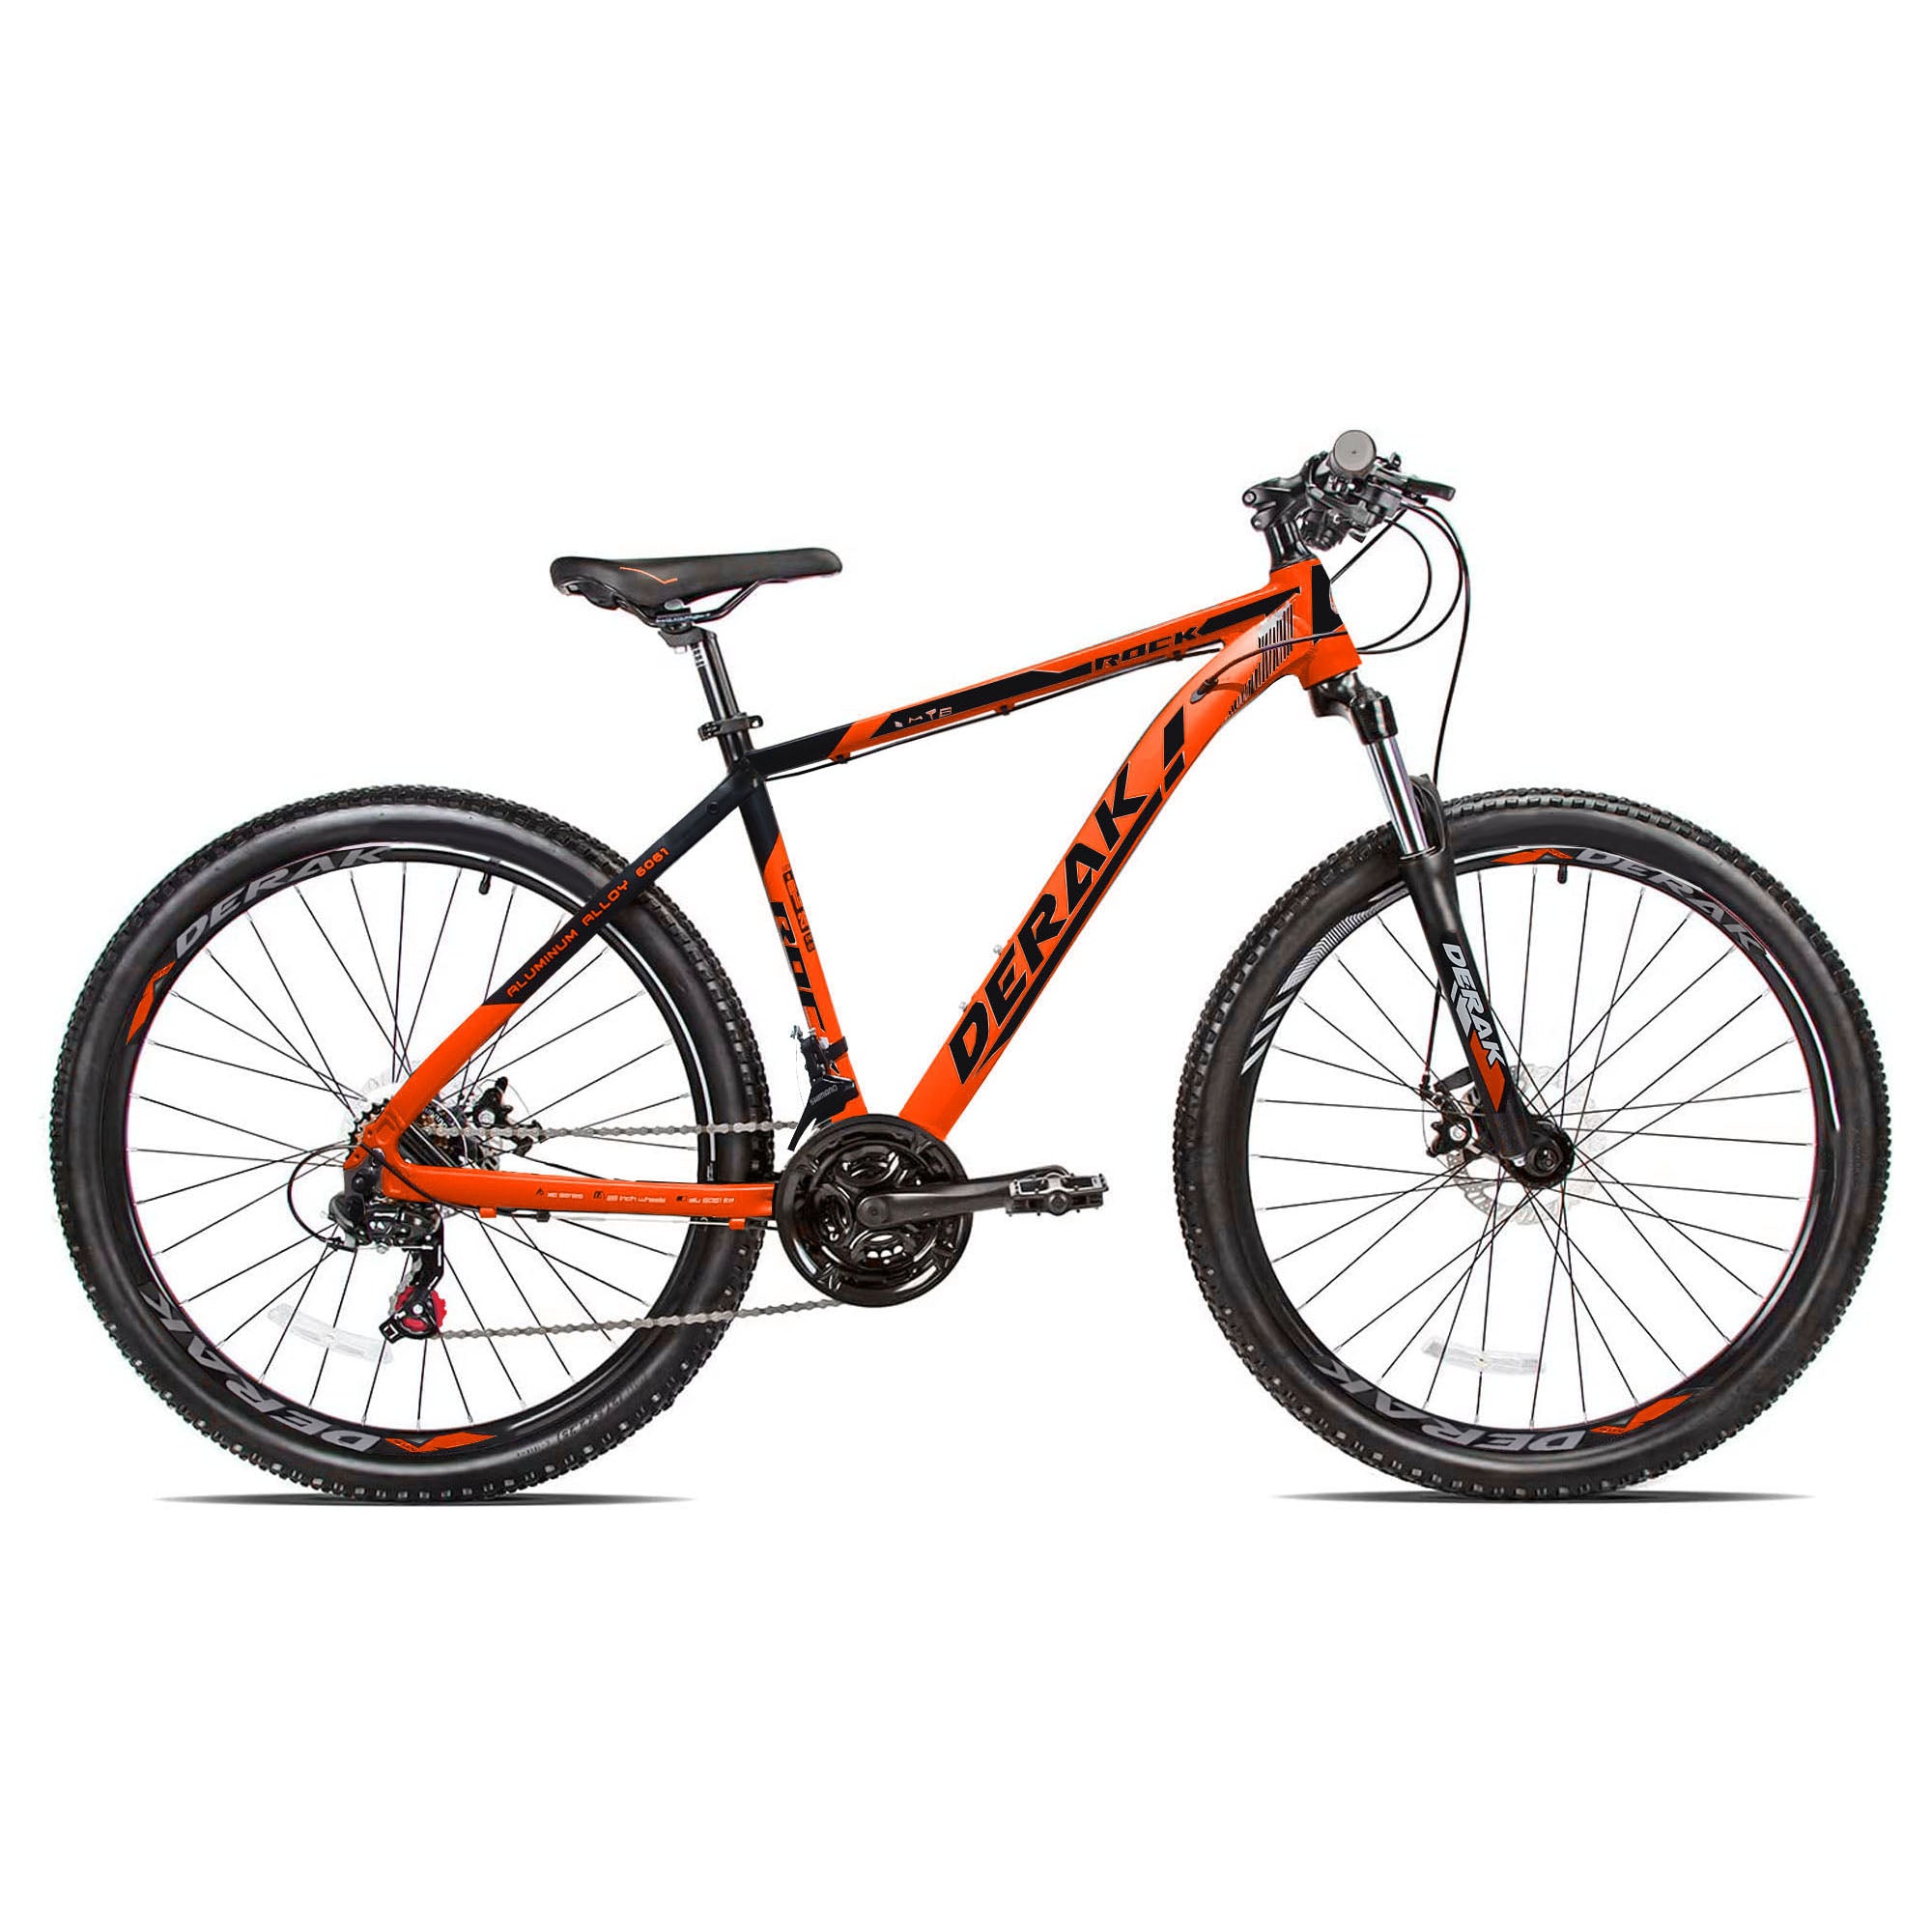 Rock Aluminum Bicycle Adults 26 Inch Orange (100% Assembled)